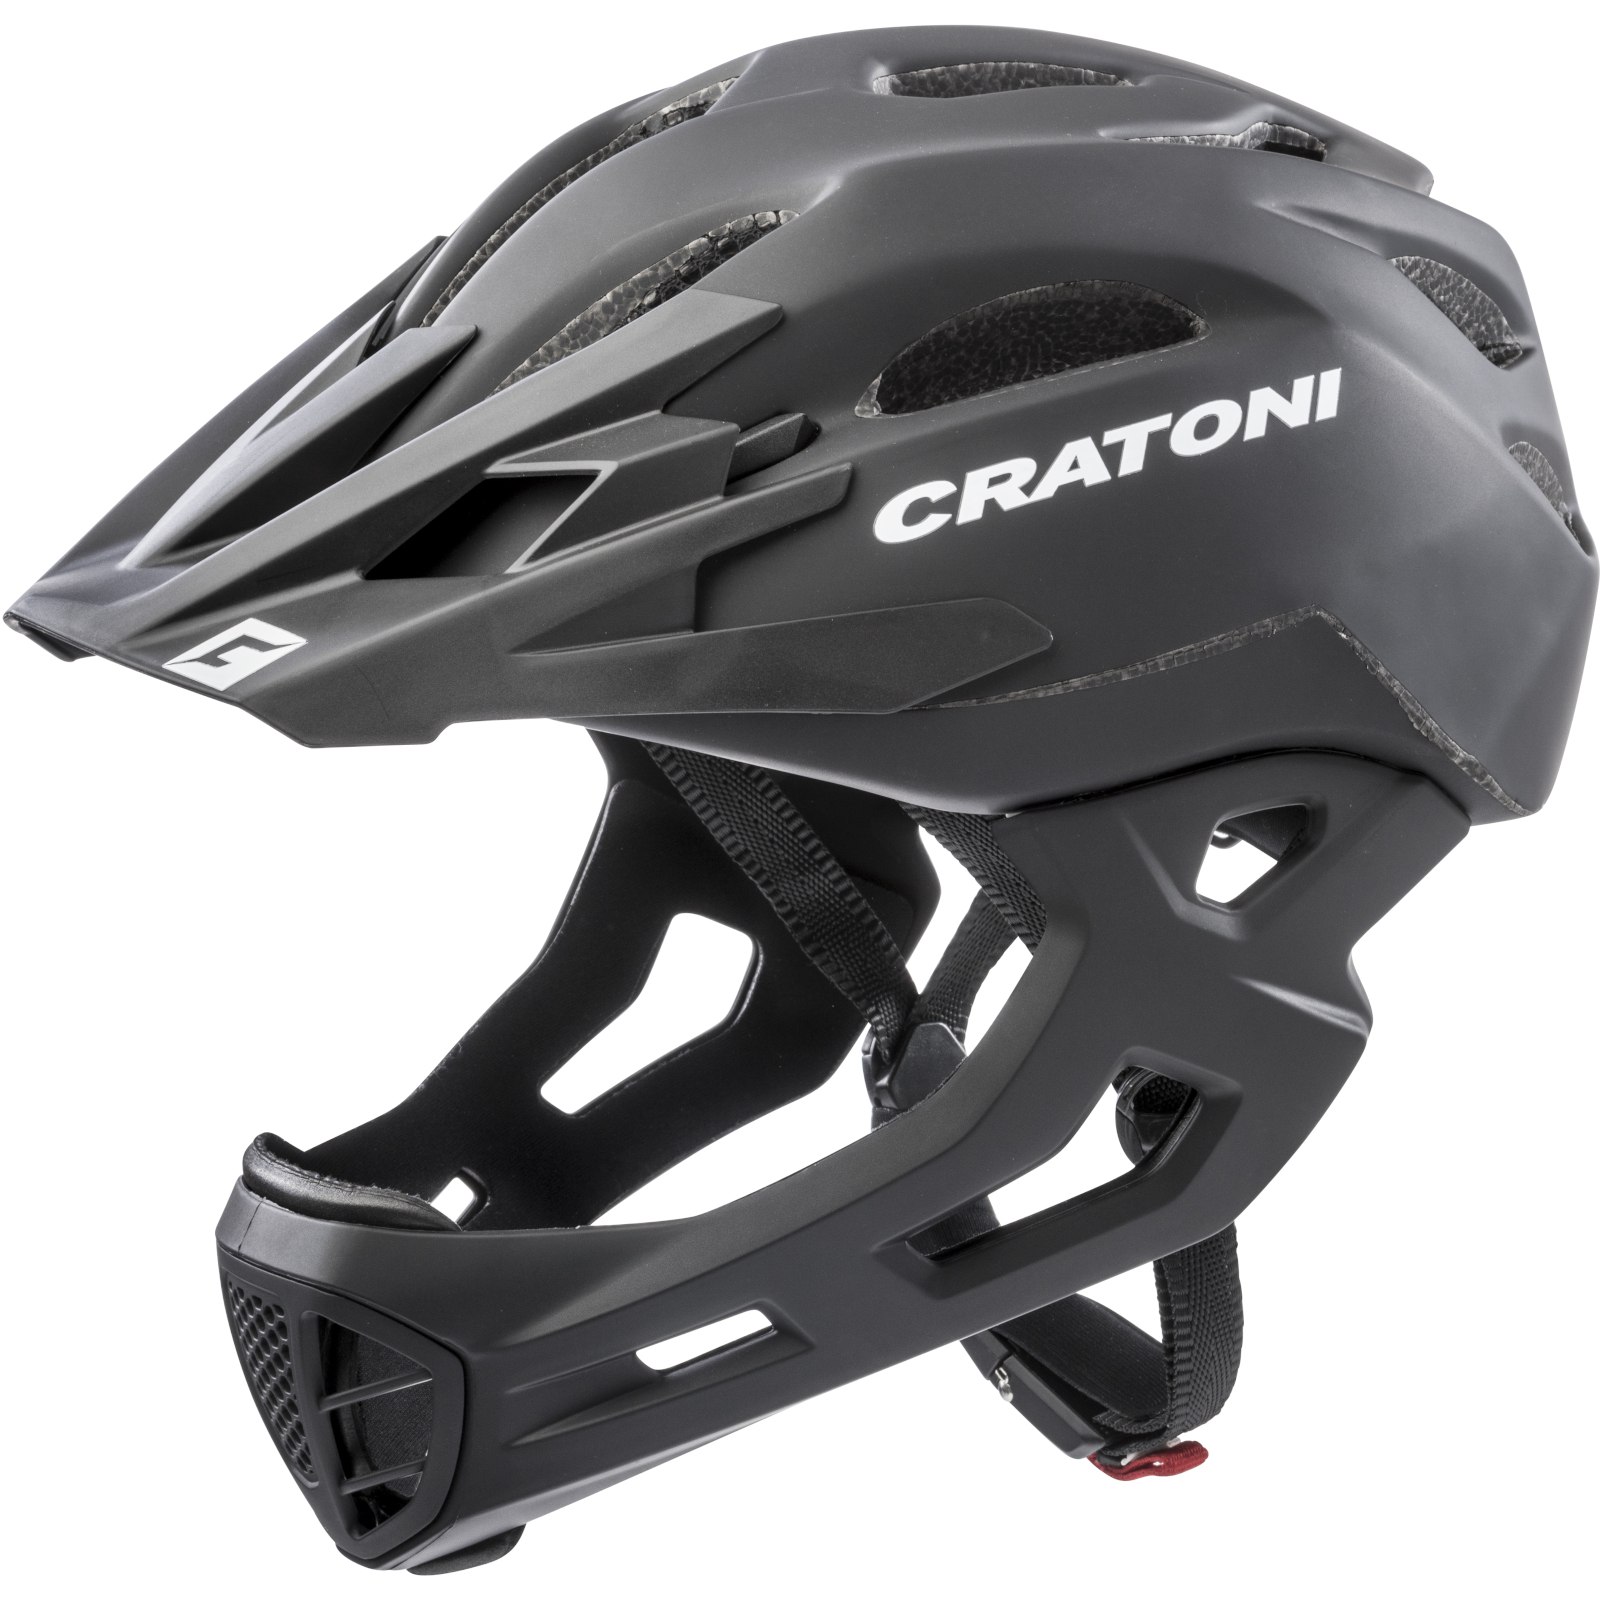 Productfoto van CRATONI C-Maniac Fullface Helmet - black matt